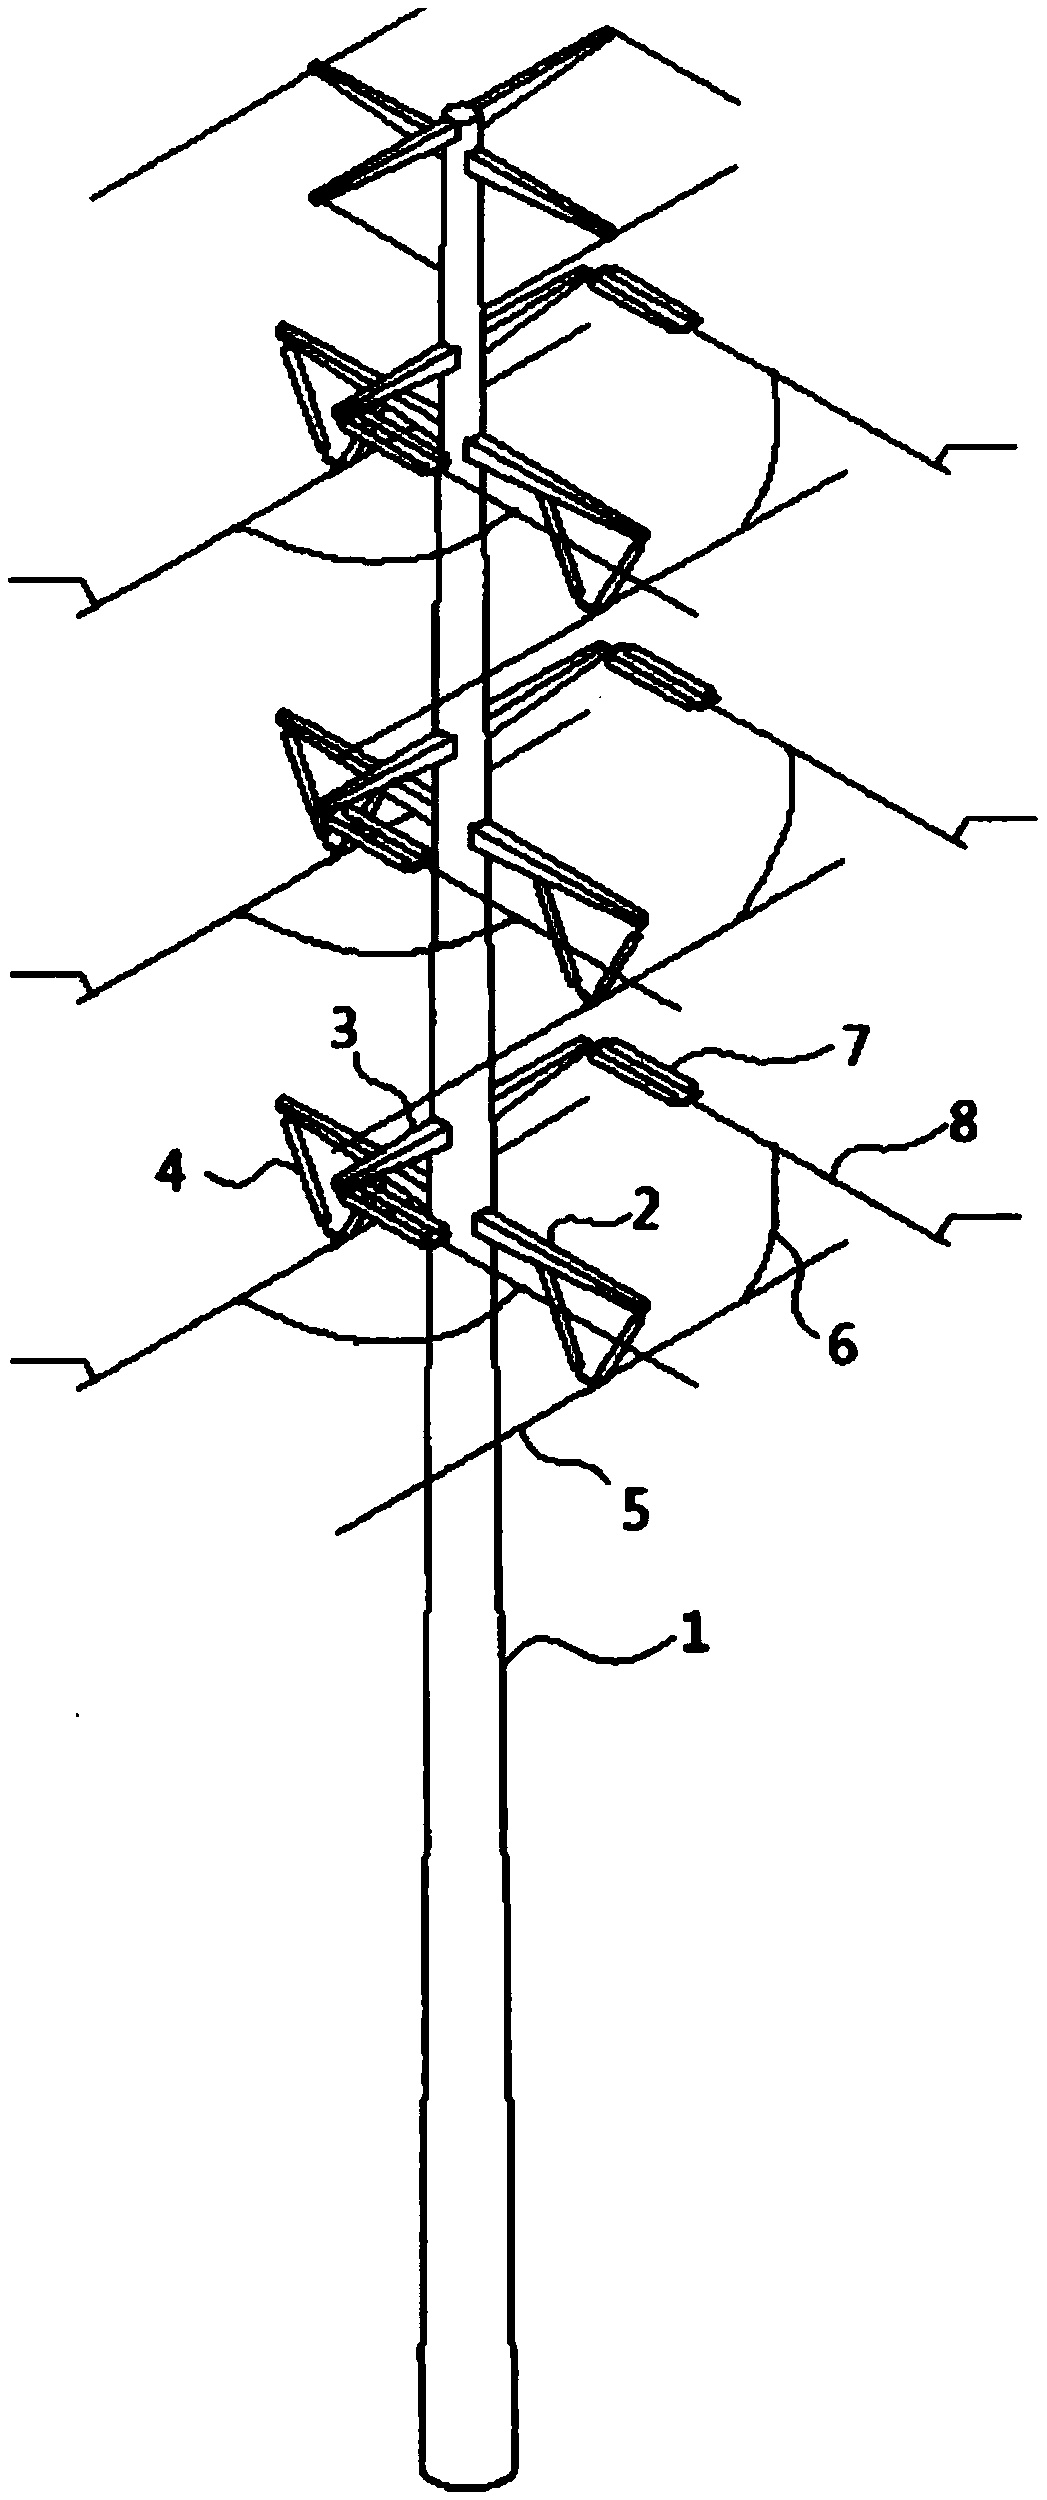 Construction method of power transmission line steel tube tower